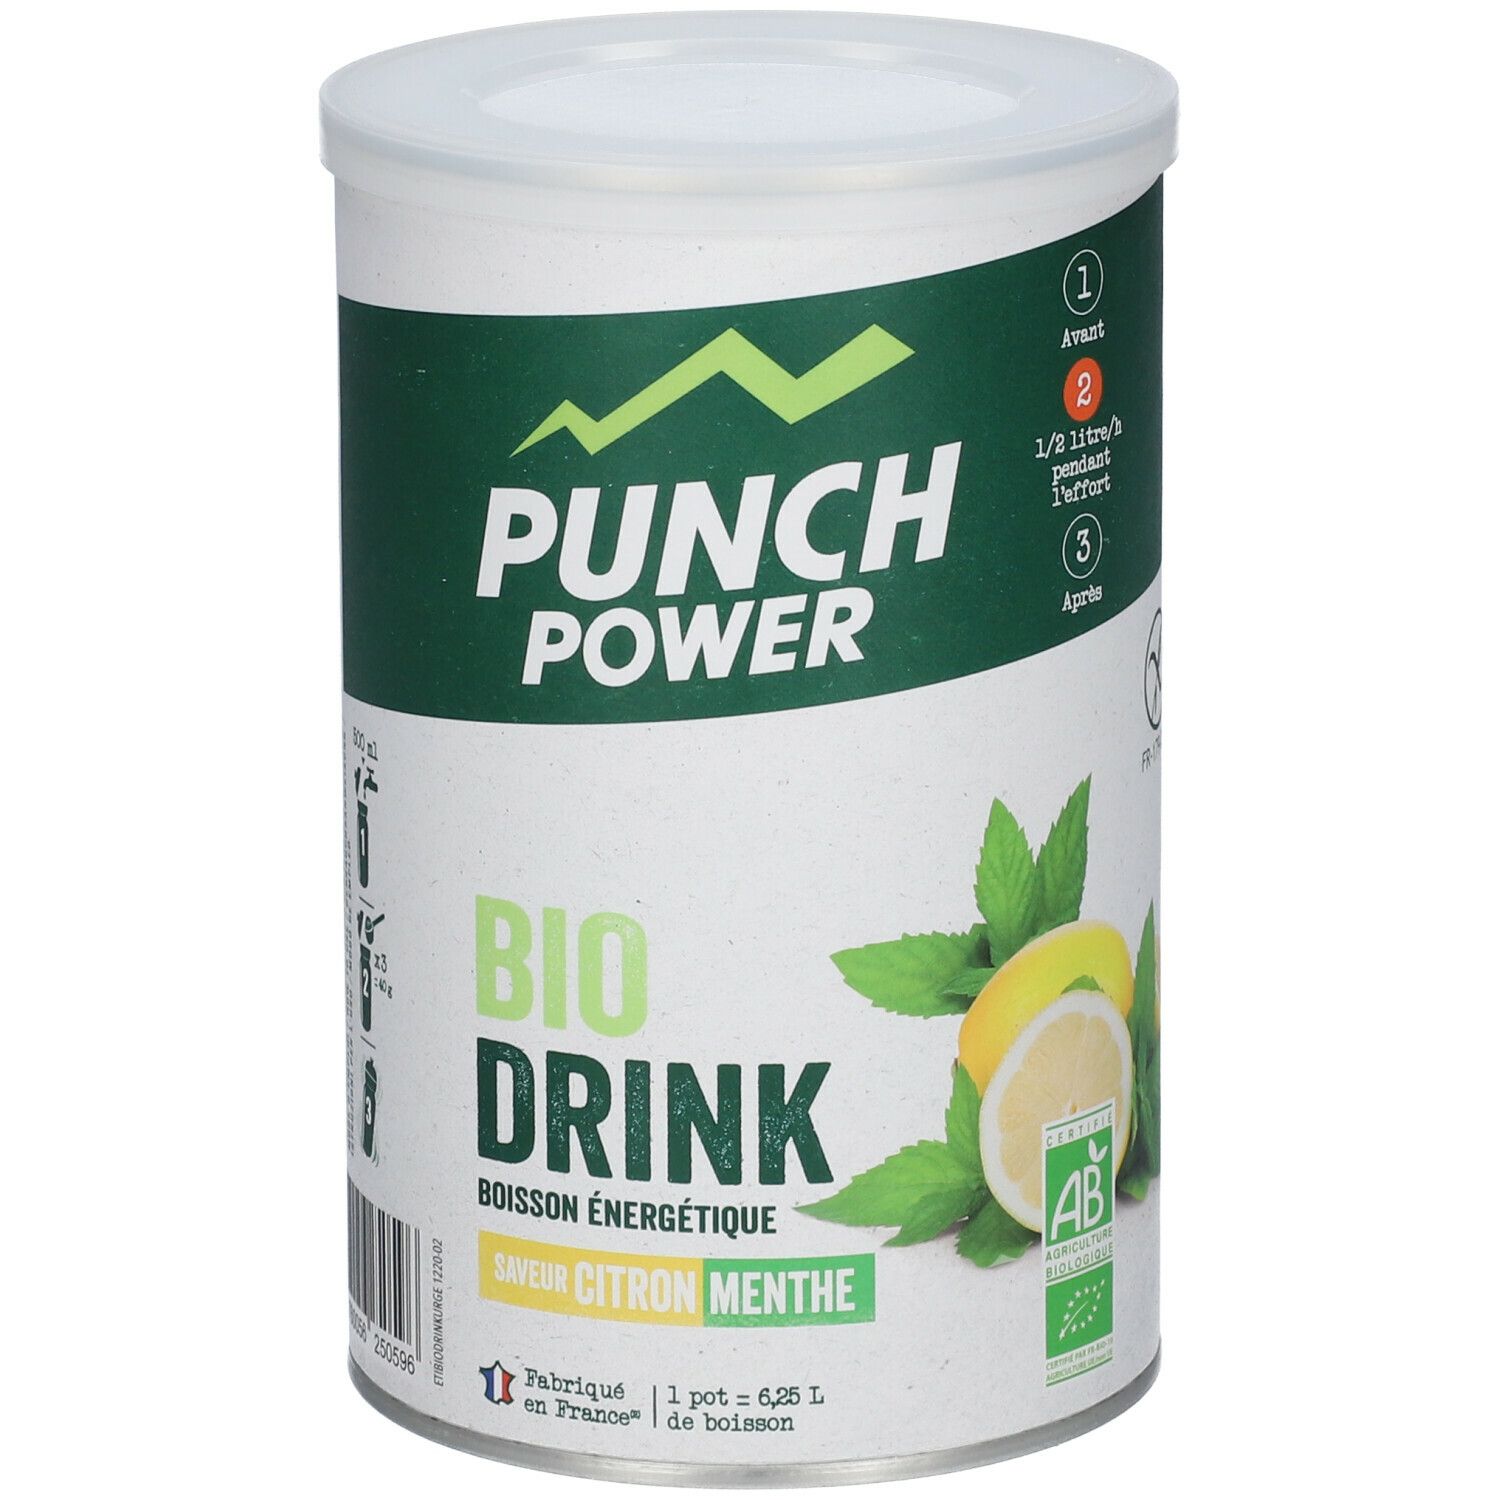 Punch Power Biodrink BIO Citron-Menthe